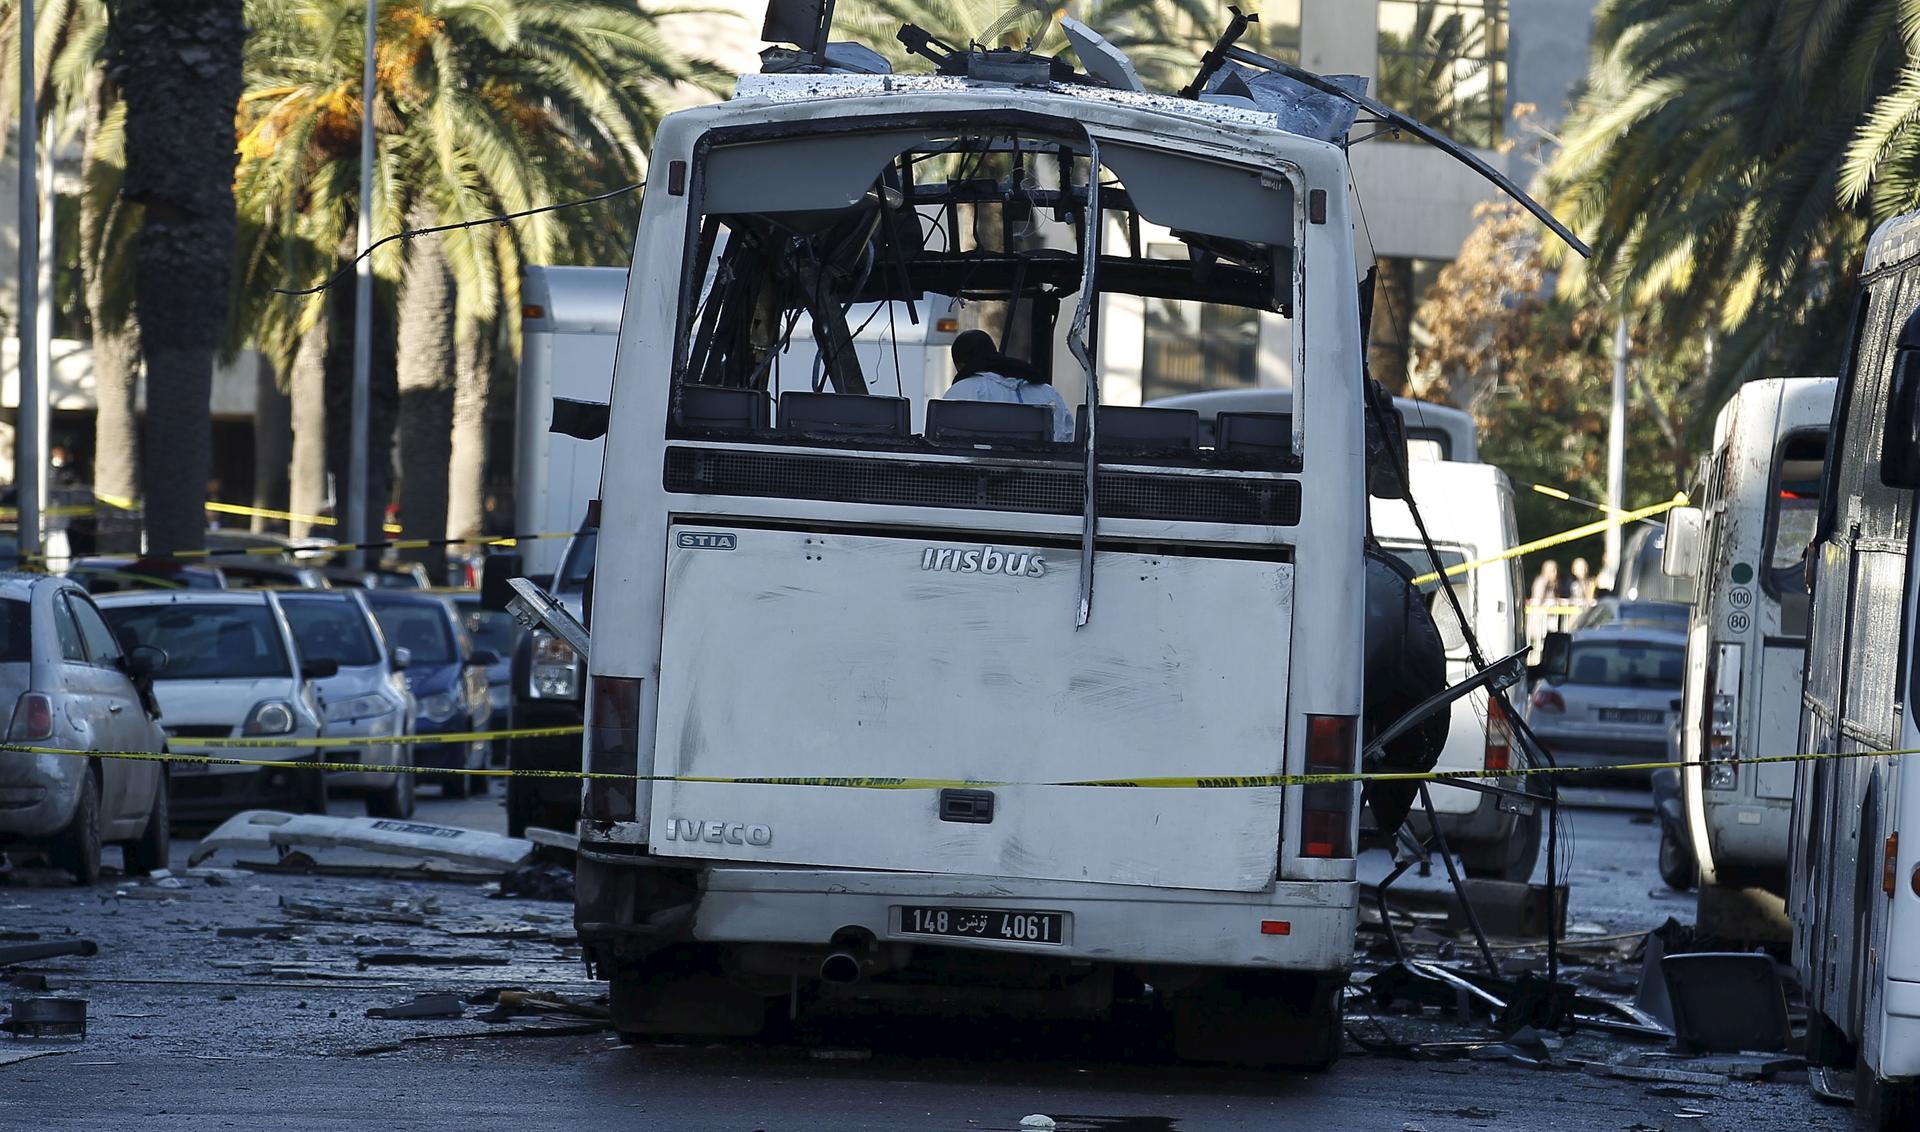 Tunisian forensics police inspect a Tunisian presidential guard bus at the scene of a suicide bomb attack in Tunis, Tunisia November 25, 2015.